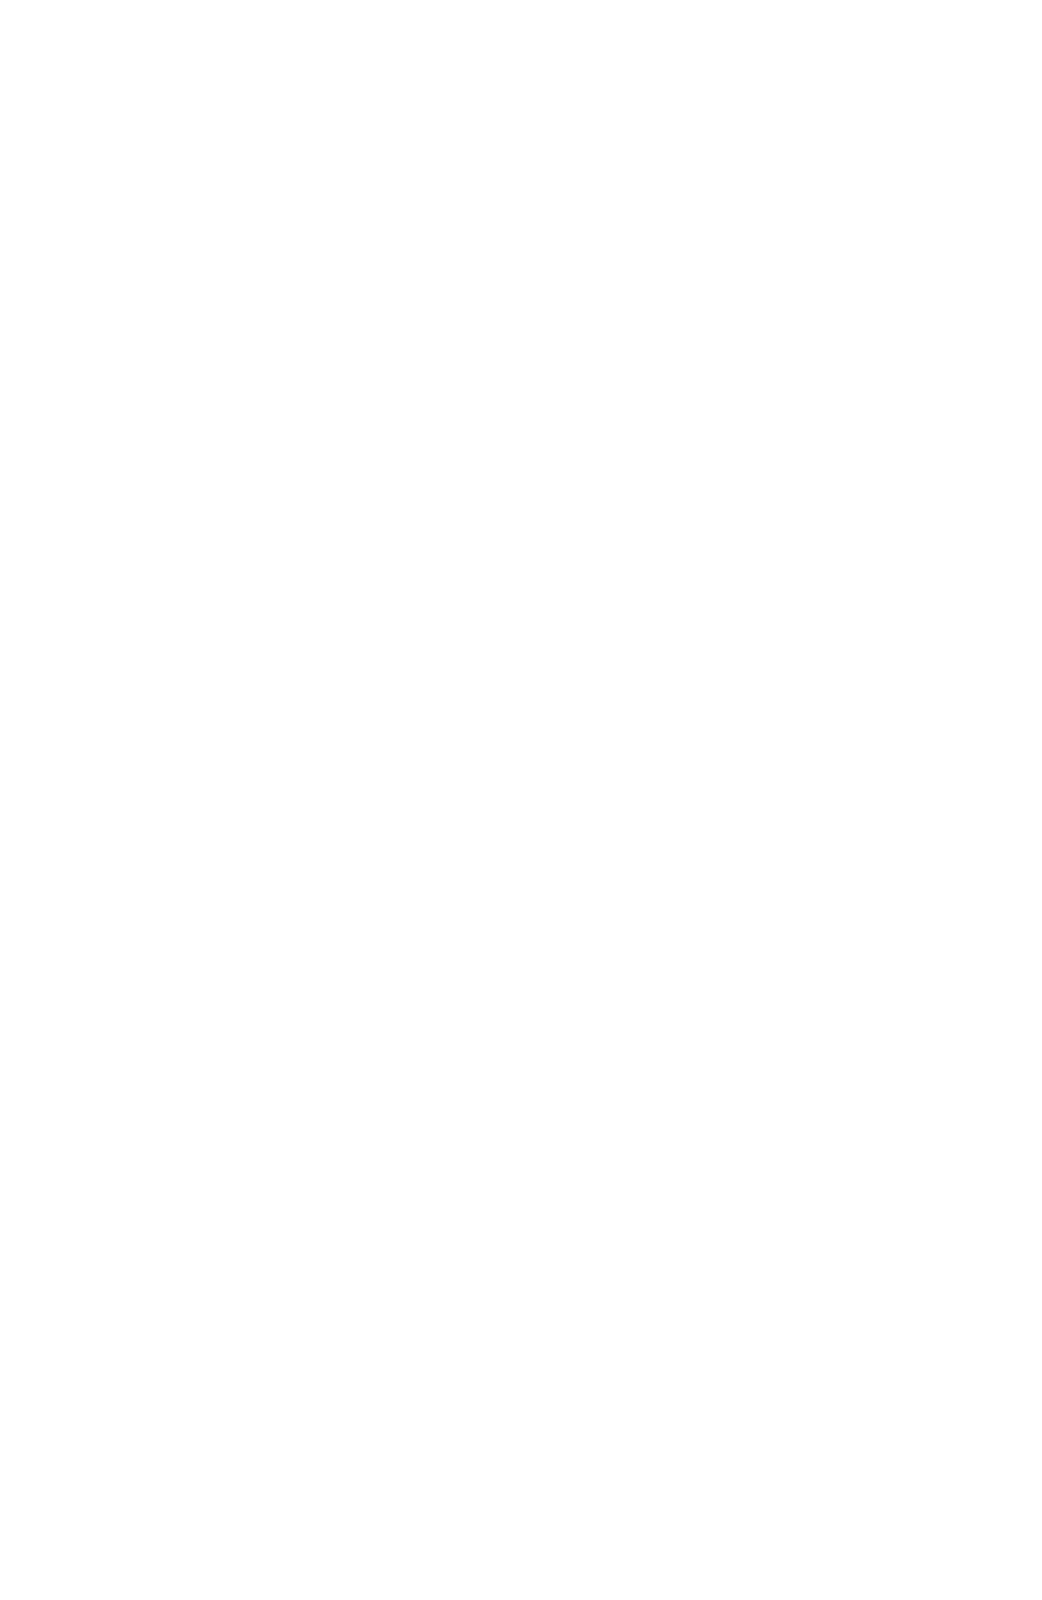 Moët Chandon - Liverpool Fc White Logo Png PNG Image